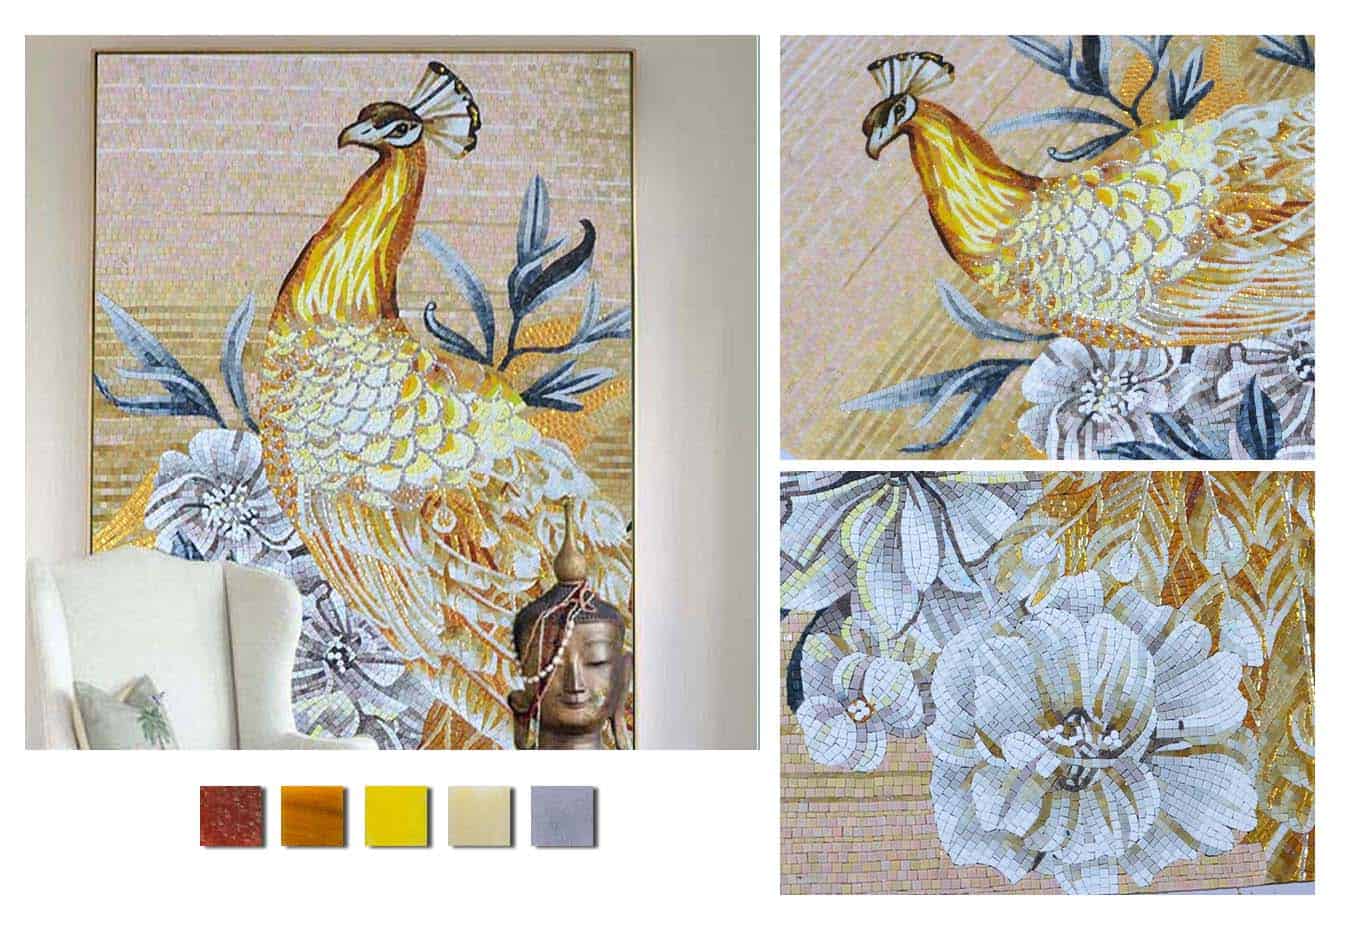 artful peacock mosaic project